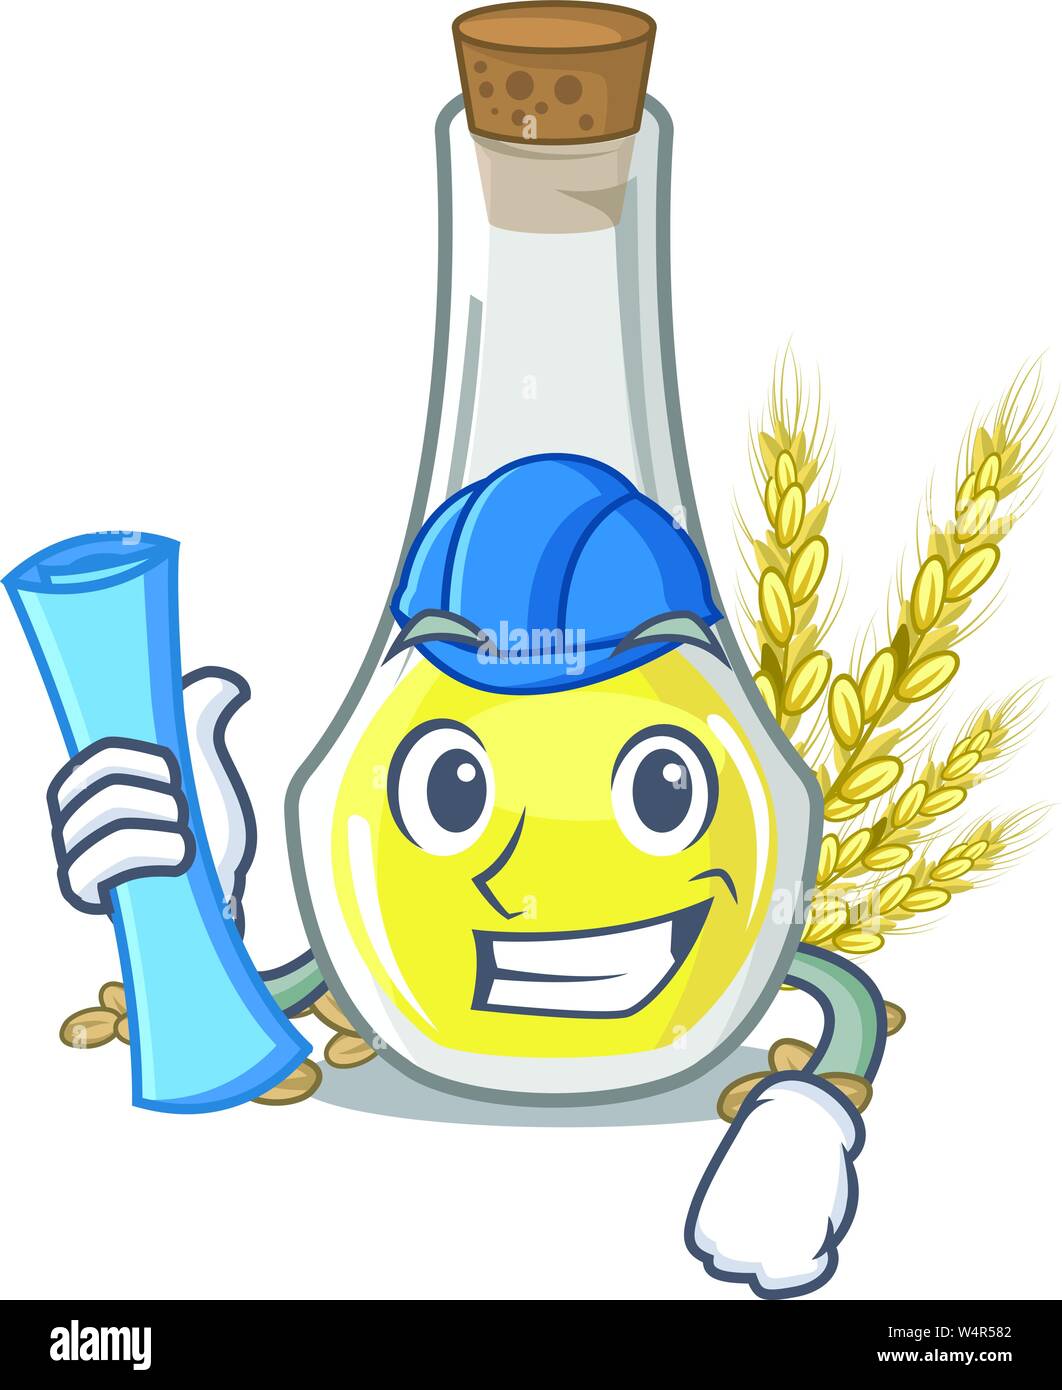 Architect wheat germ oil the mascot shape vector illustration Stock Vector